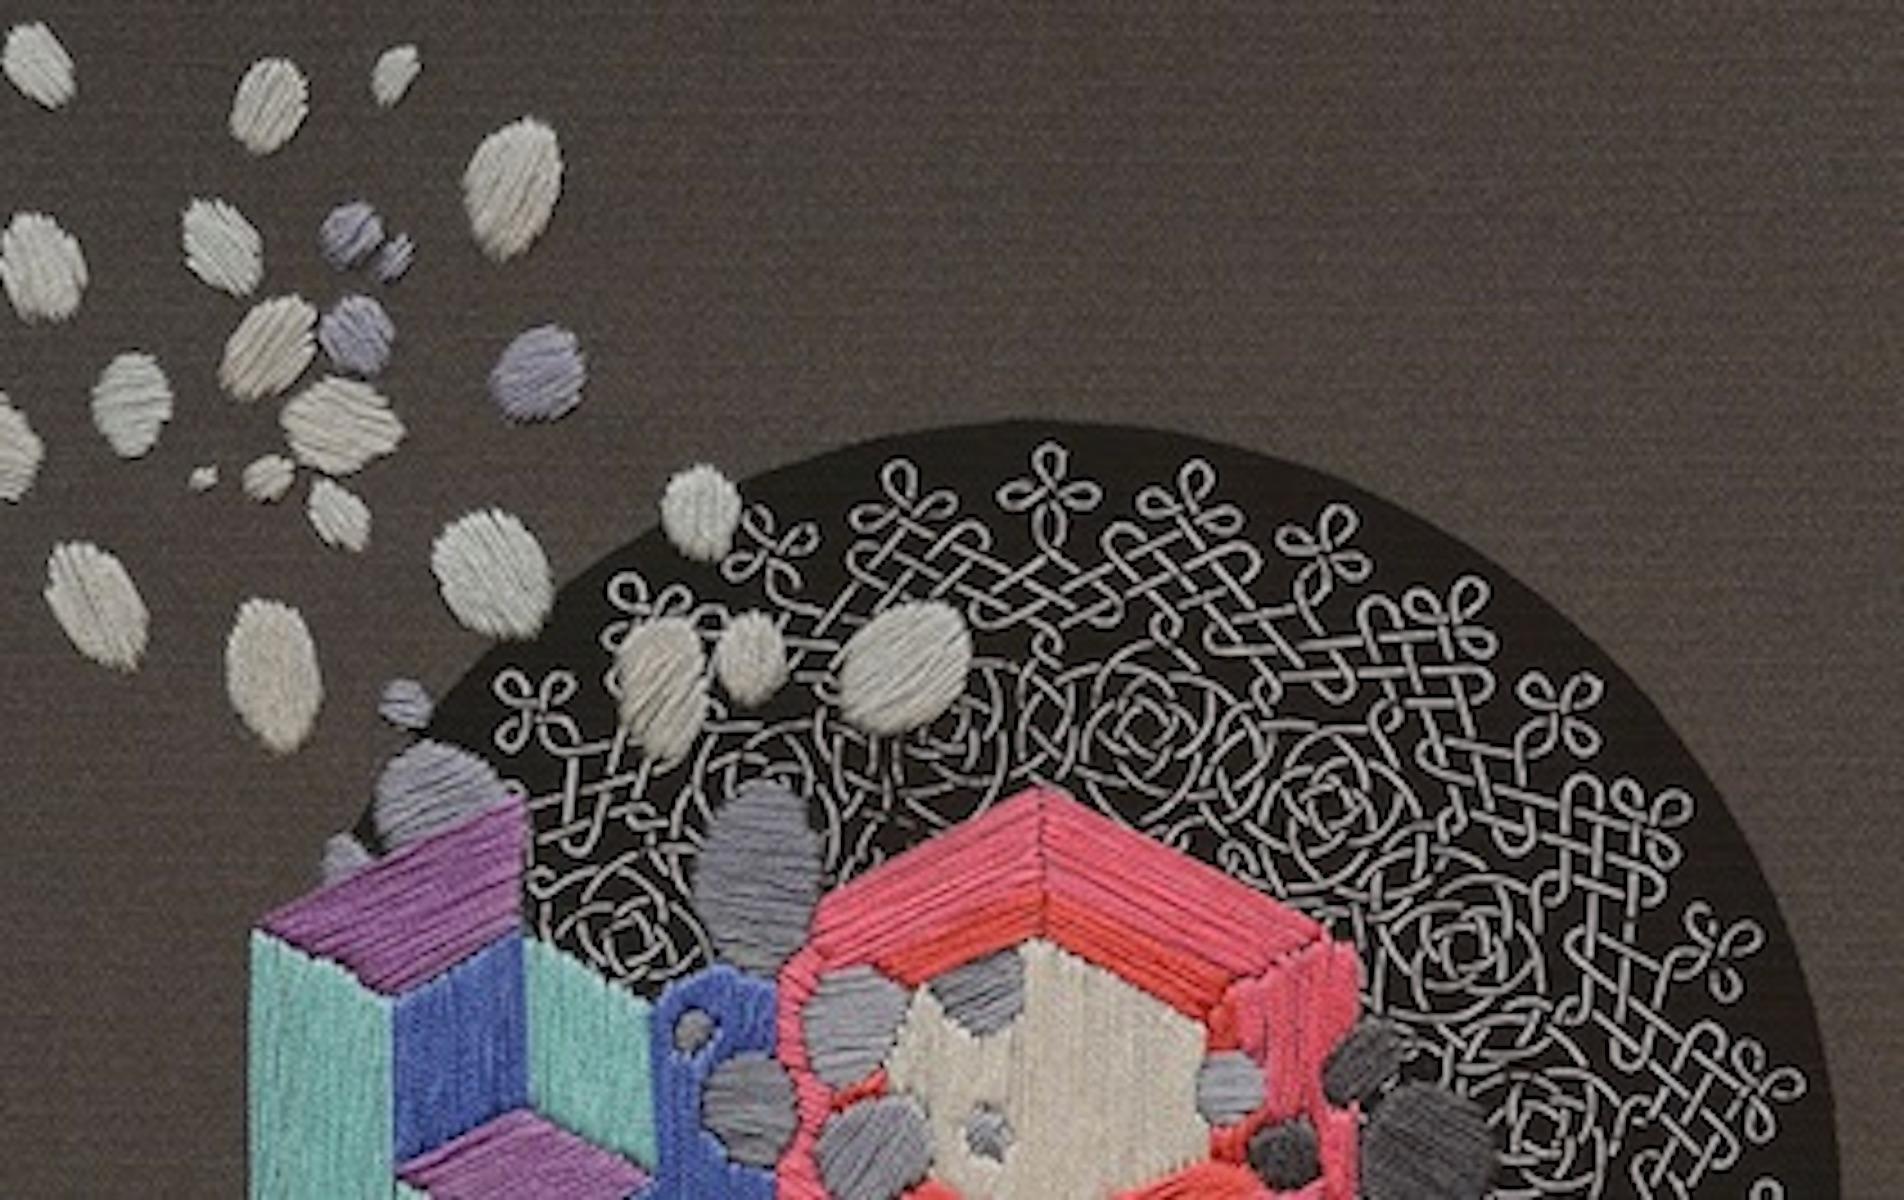 Deconstrucción. Unique embroidery artwork from the Durero series  - Contemporary Art by Ana Seggiaro